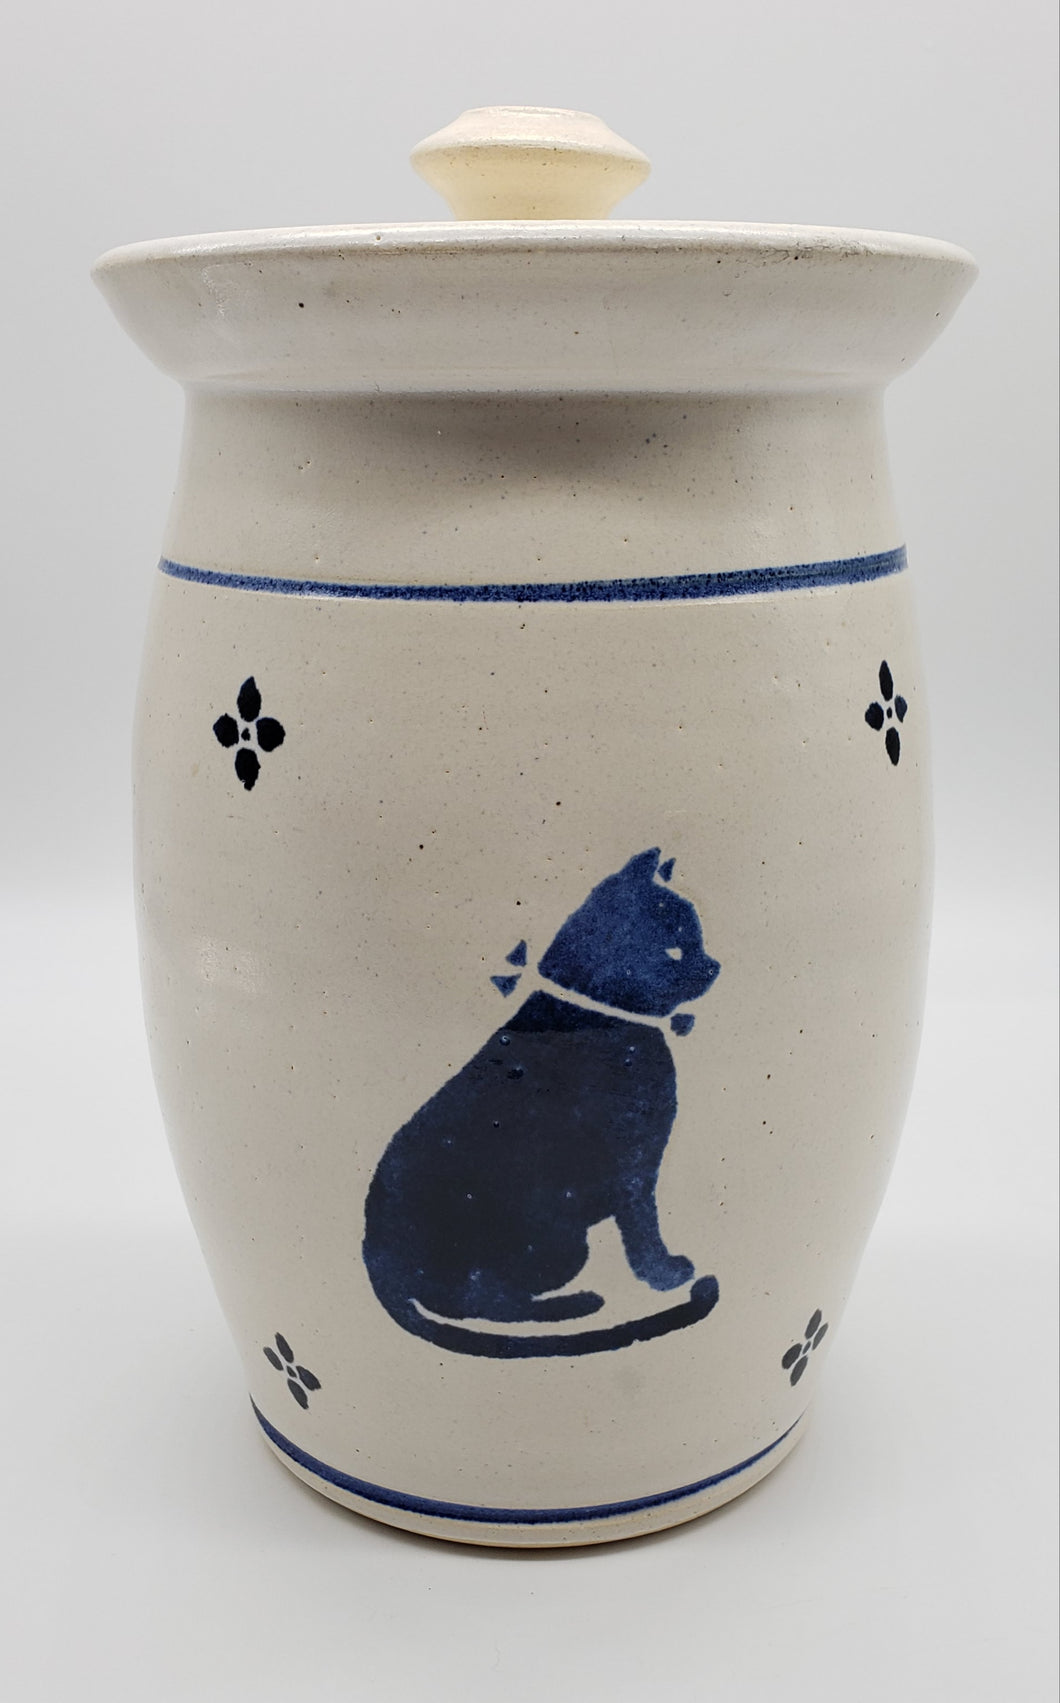 Spectrum Ltd Cat Lidded Stoneware Canister